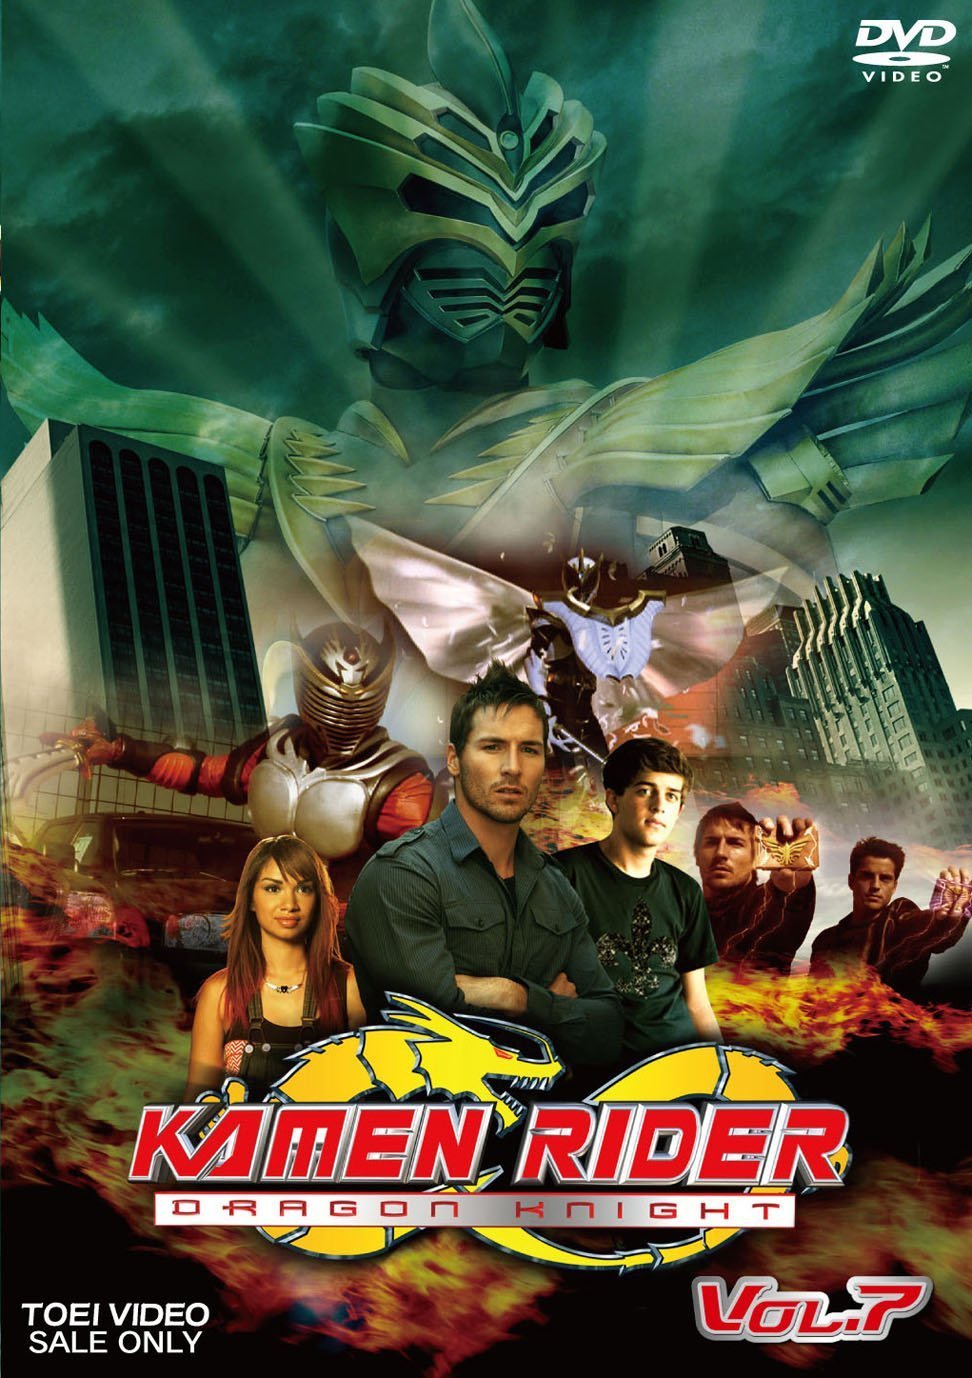 Kamen Rider Dragon Knight: Volume 7 DVD (Japan)